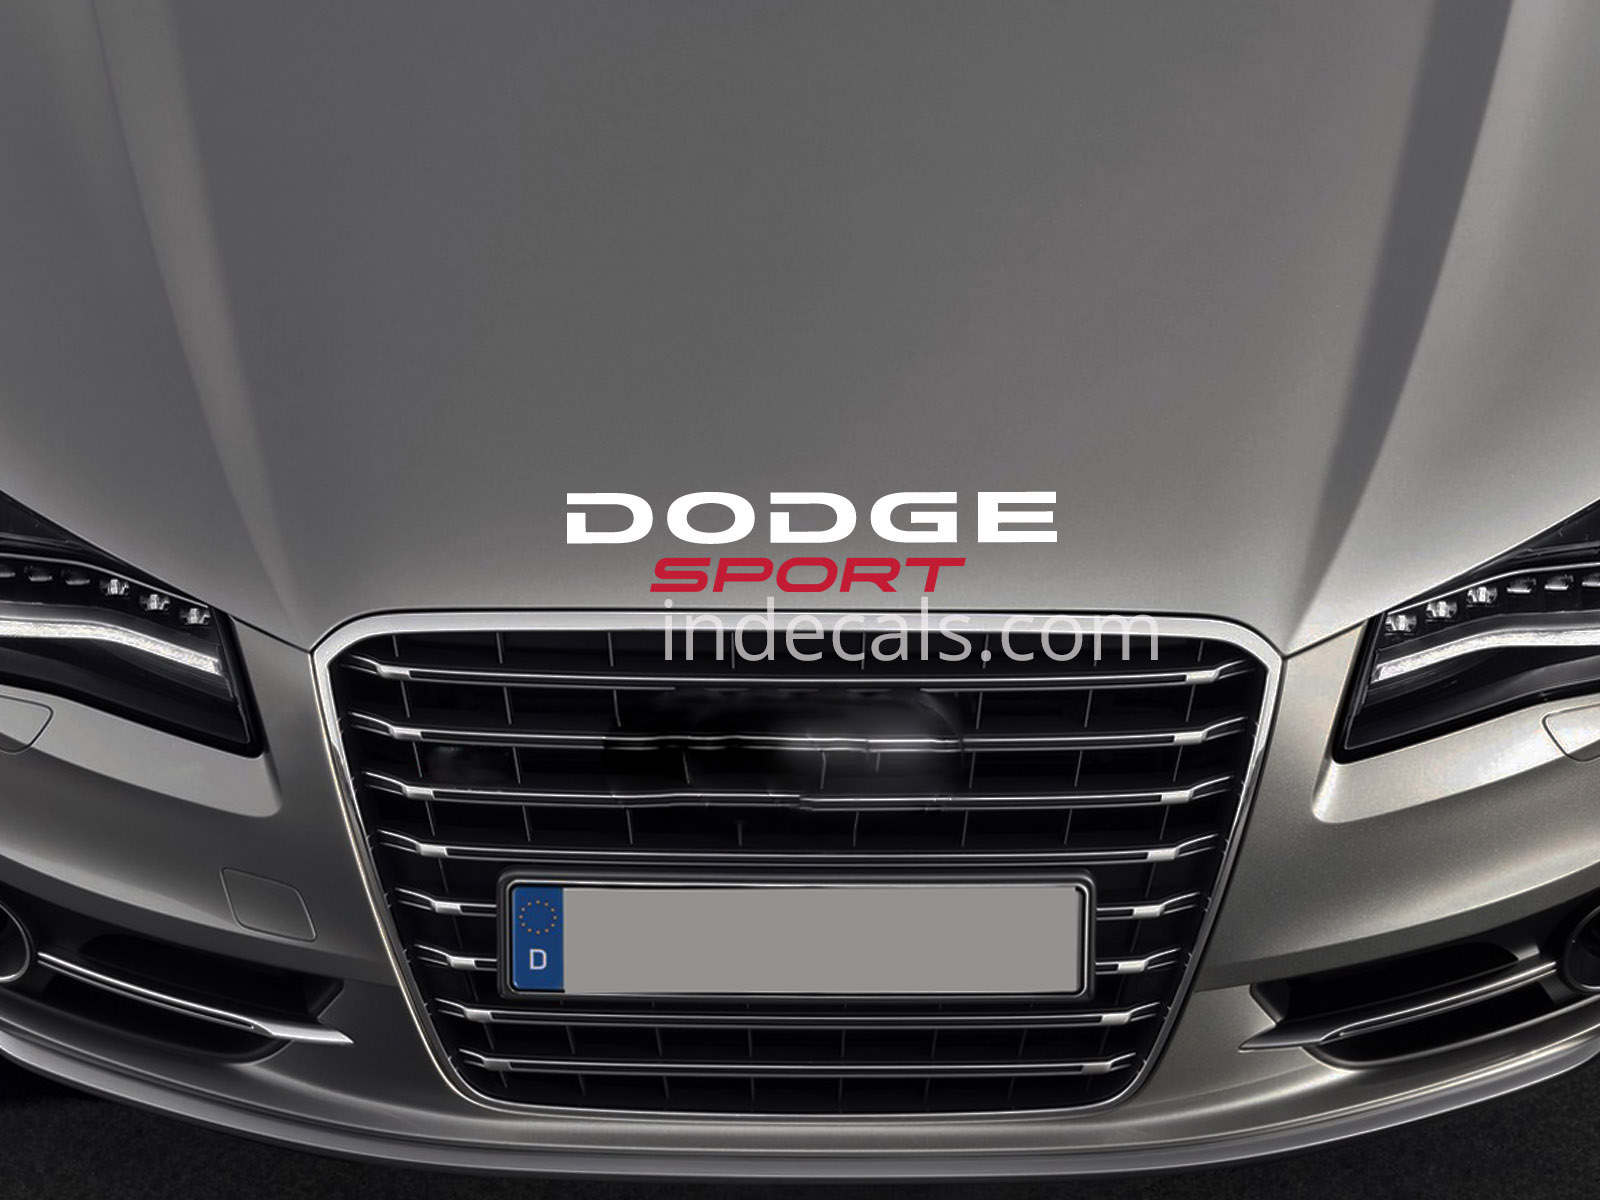 1 x Dodge Sport Sticker for Bonnet - White & Red